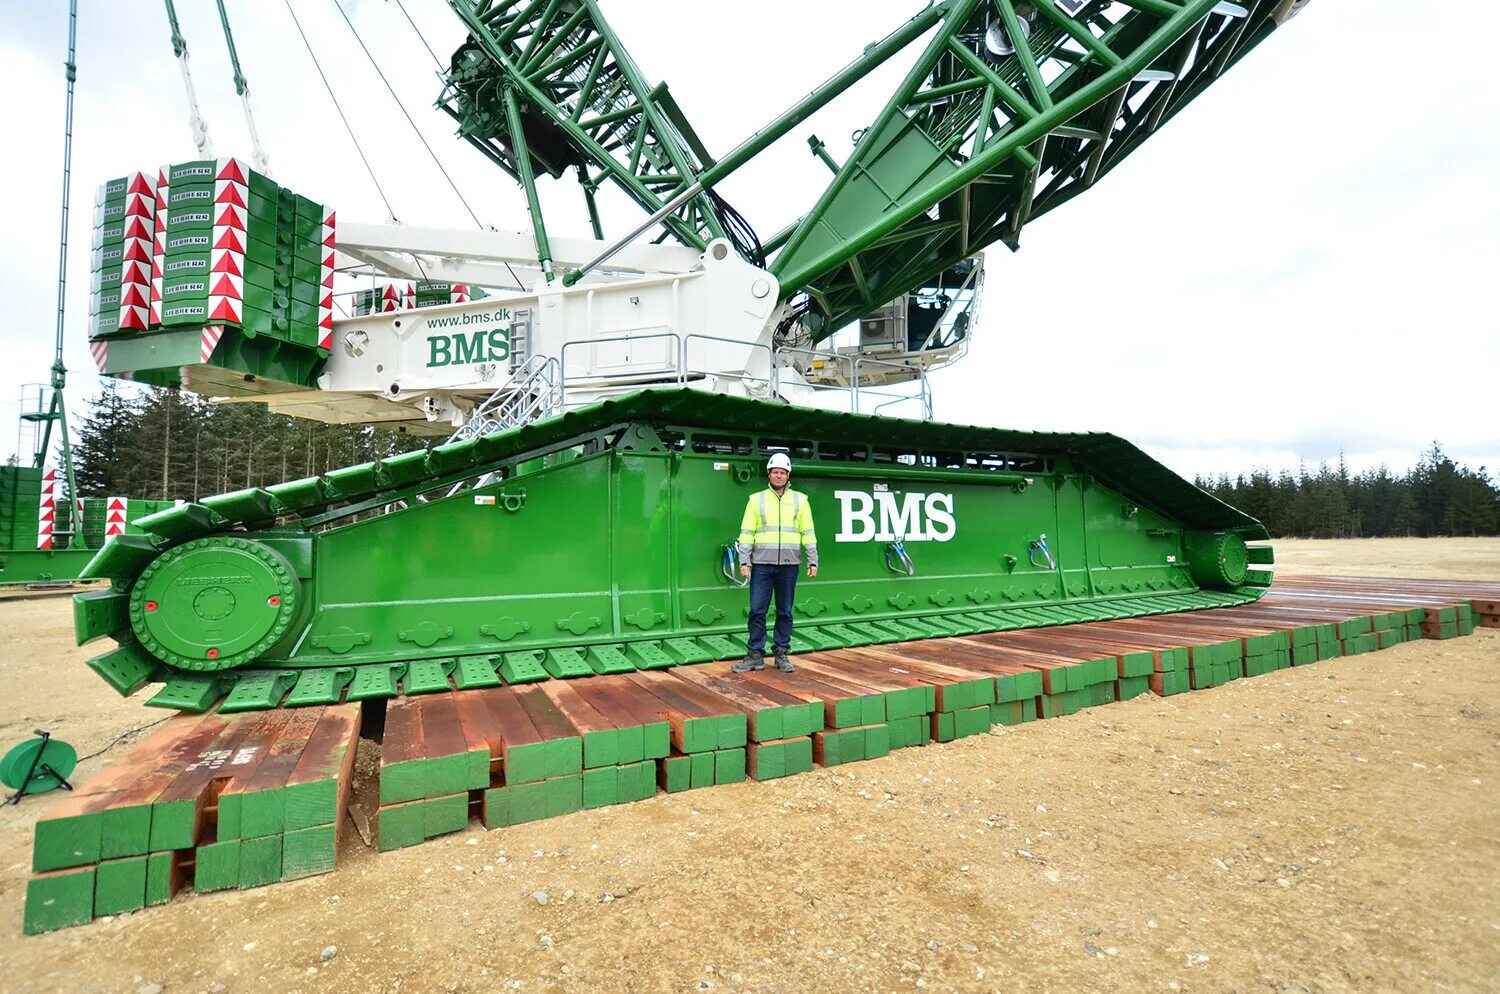 БМС кран. BMS Heavy Cranes. СОПИГ краны. Зеленый строительный кран. Bms group